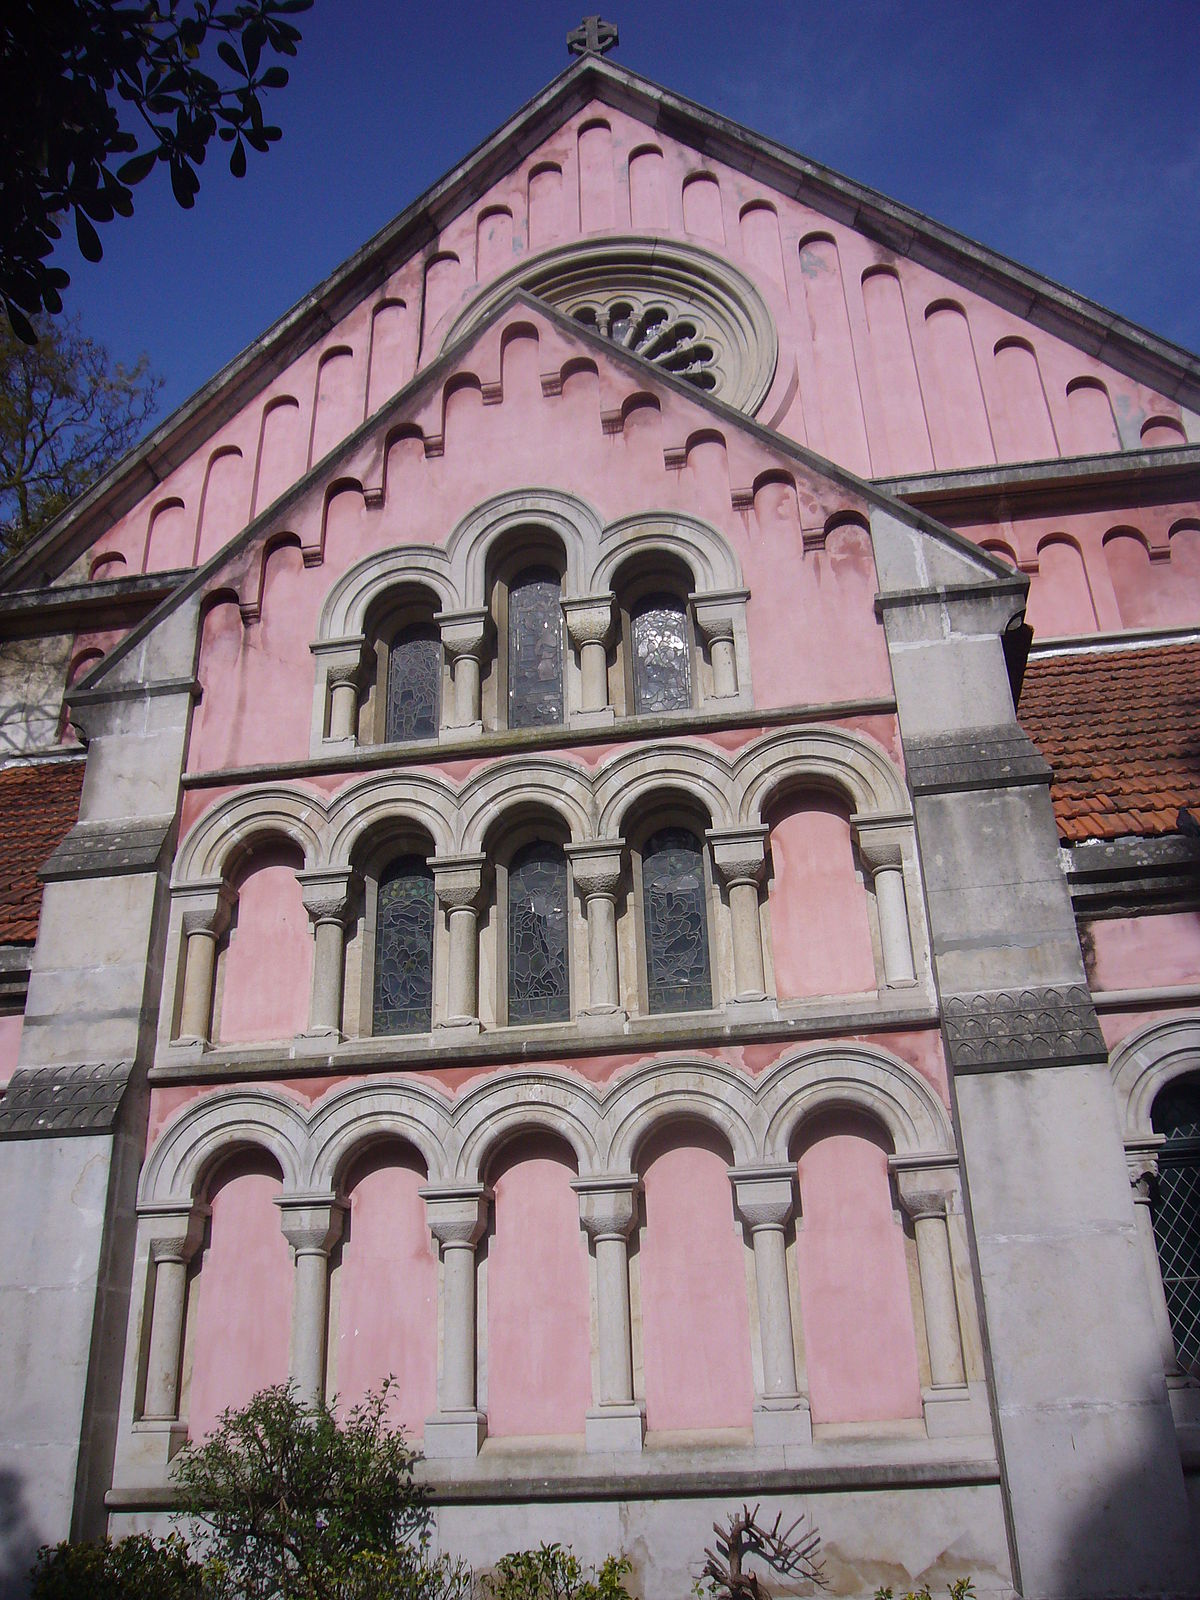 St. George's Church, Lisbon - Wikipedia